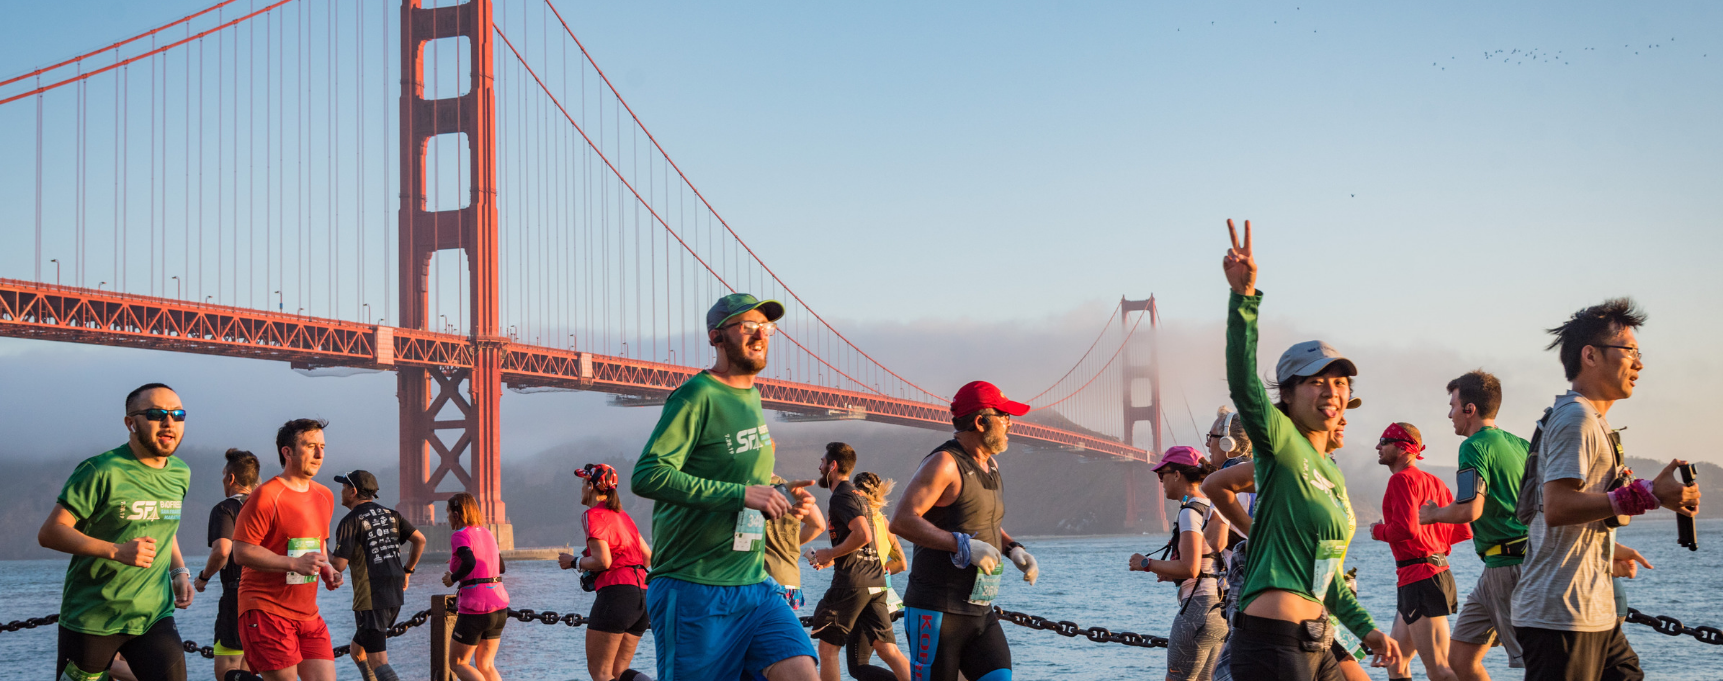 Why You Should Run The San Francisco Marathon: 2019 Race Recap